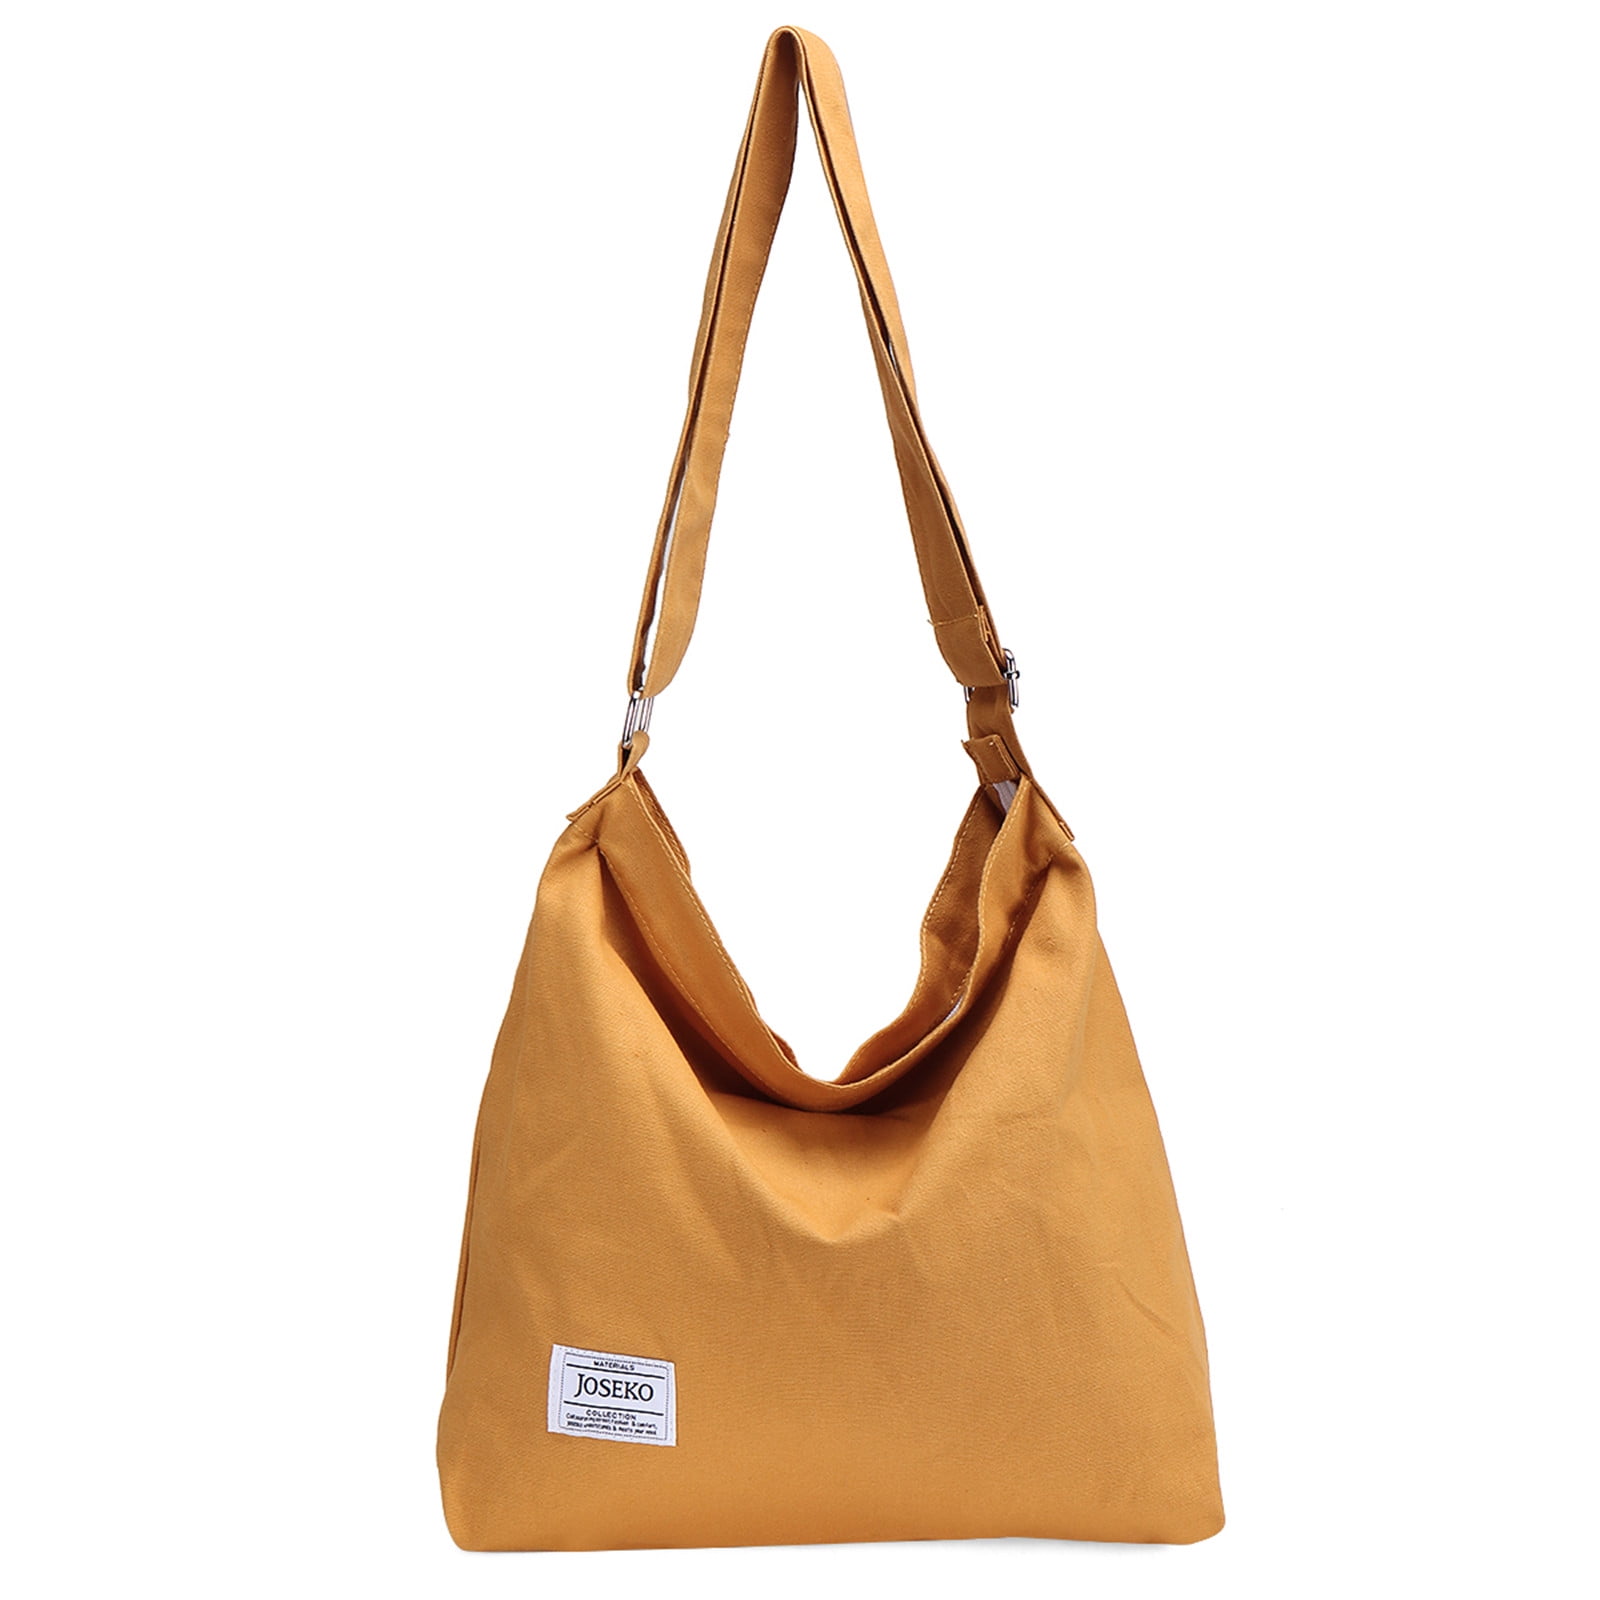 Santa Paws Womens Tote Bag Canvas Shoulder Bag Crossbody Handbag For Work Shopping 